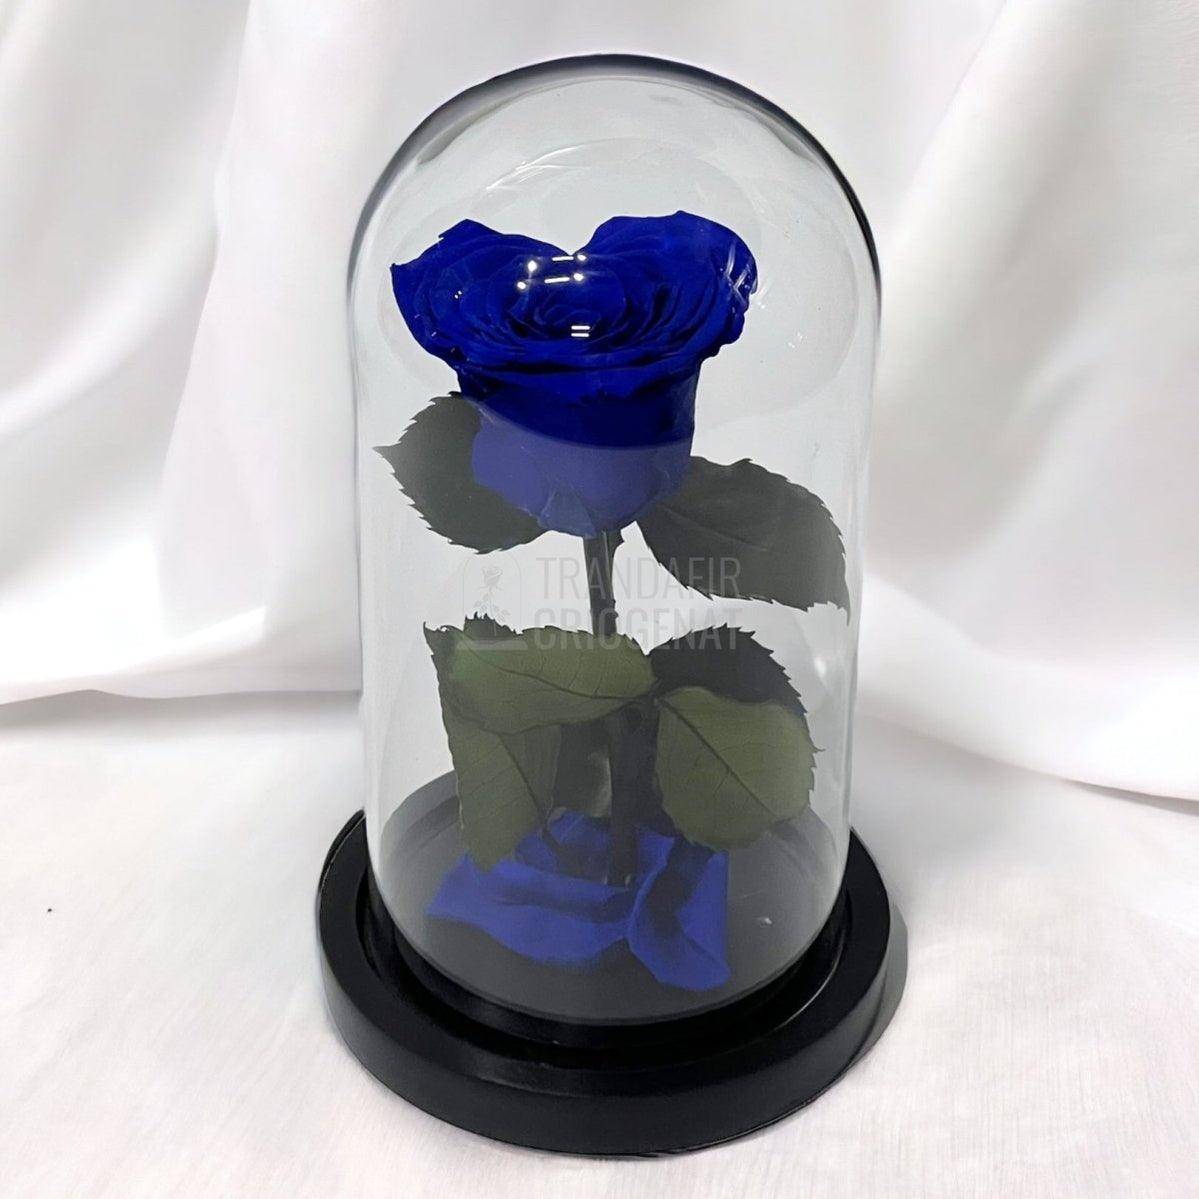 Trandafir Criogenat albastru inima Ø8cm in cupola de sticla - Trandafir-Criogenat.ro